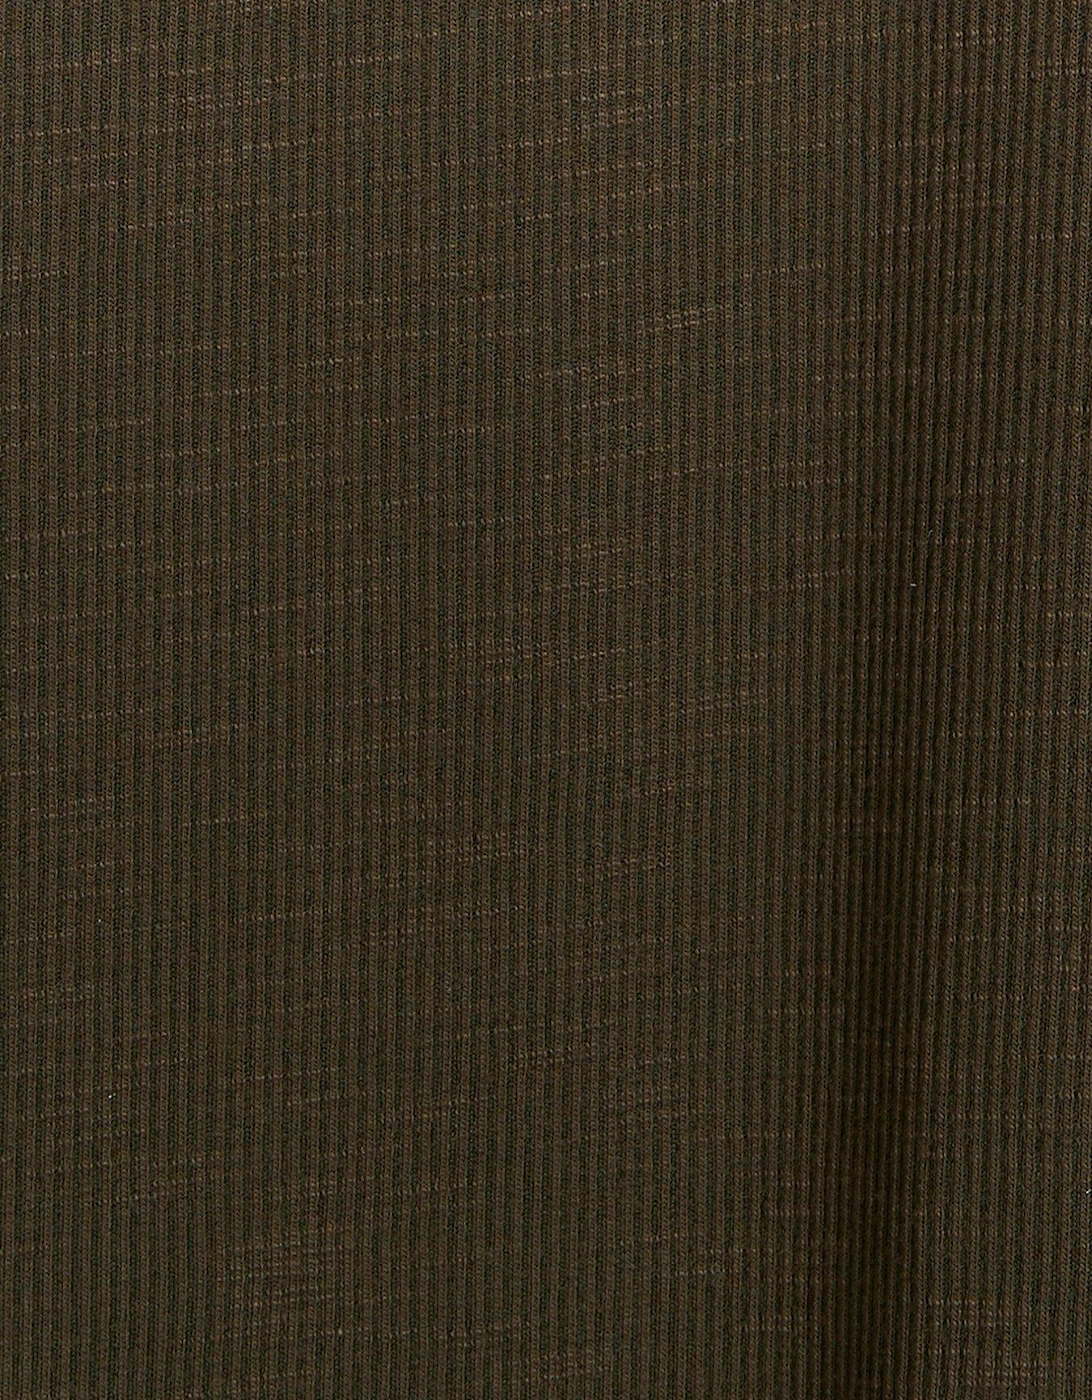 Lace Long Sleeve Top - Khaki